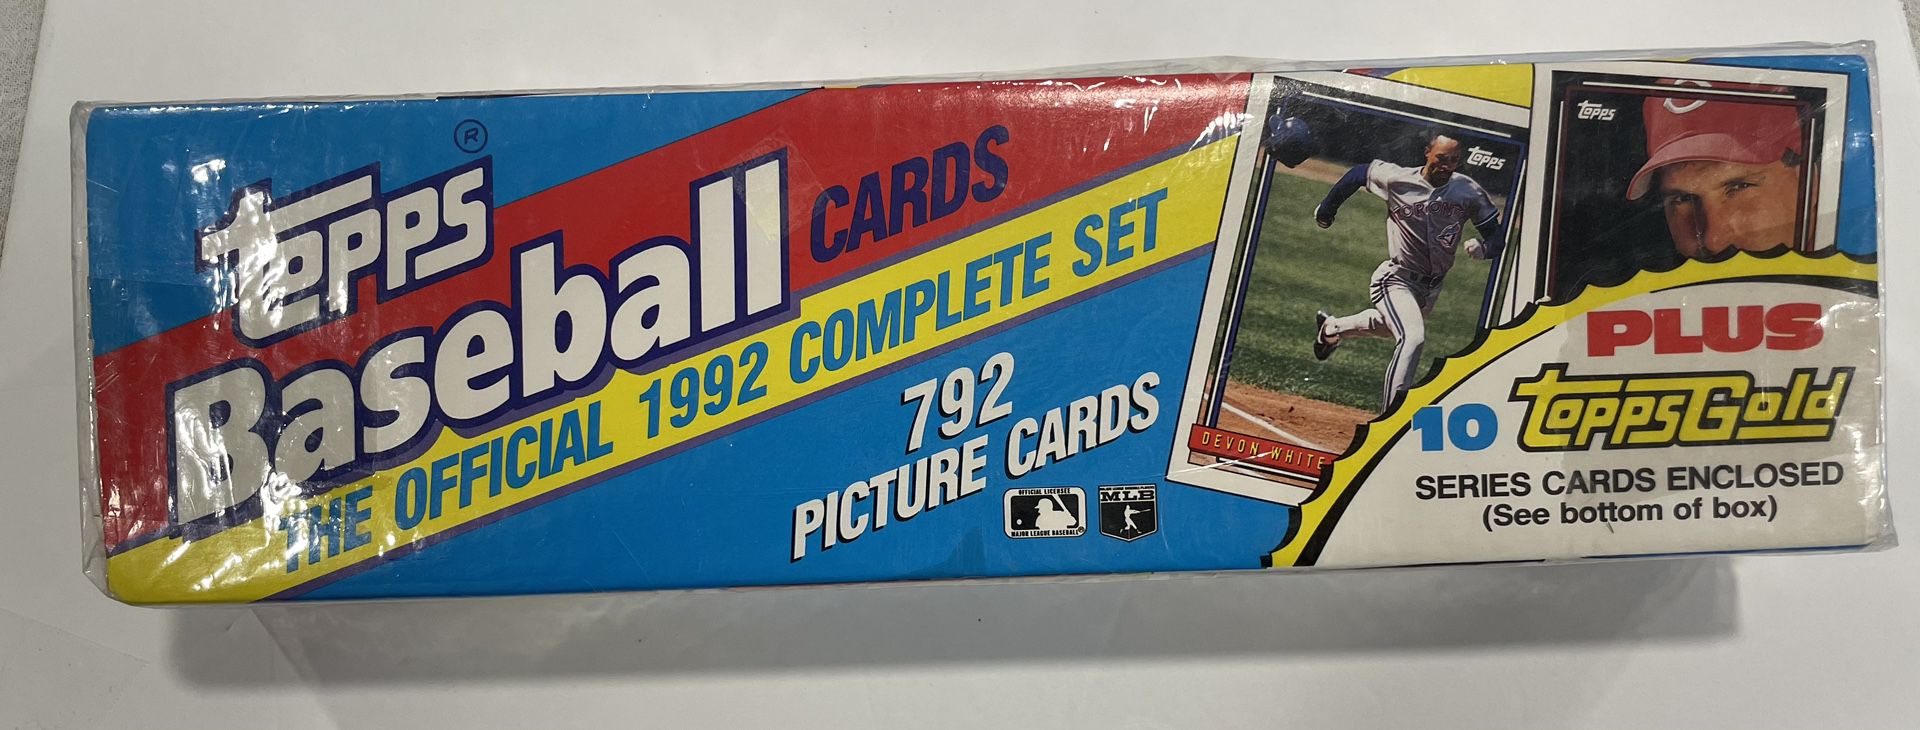 1992 Topps Baseball Complete Set 792 Cards $30